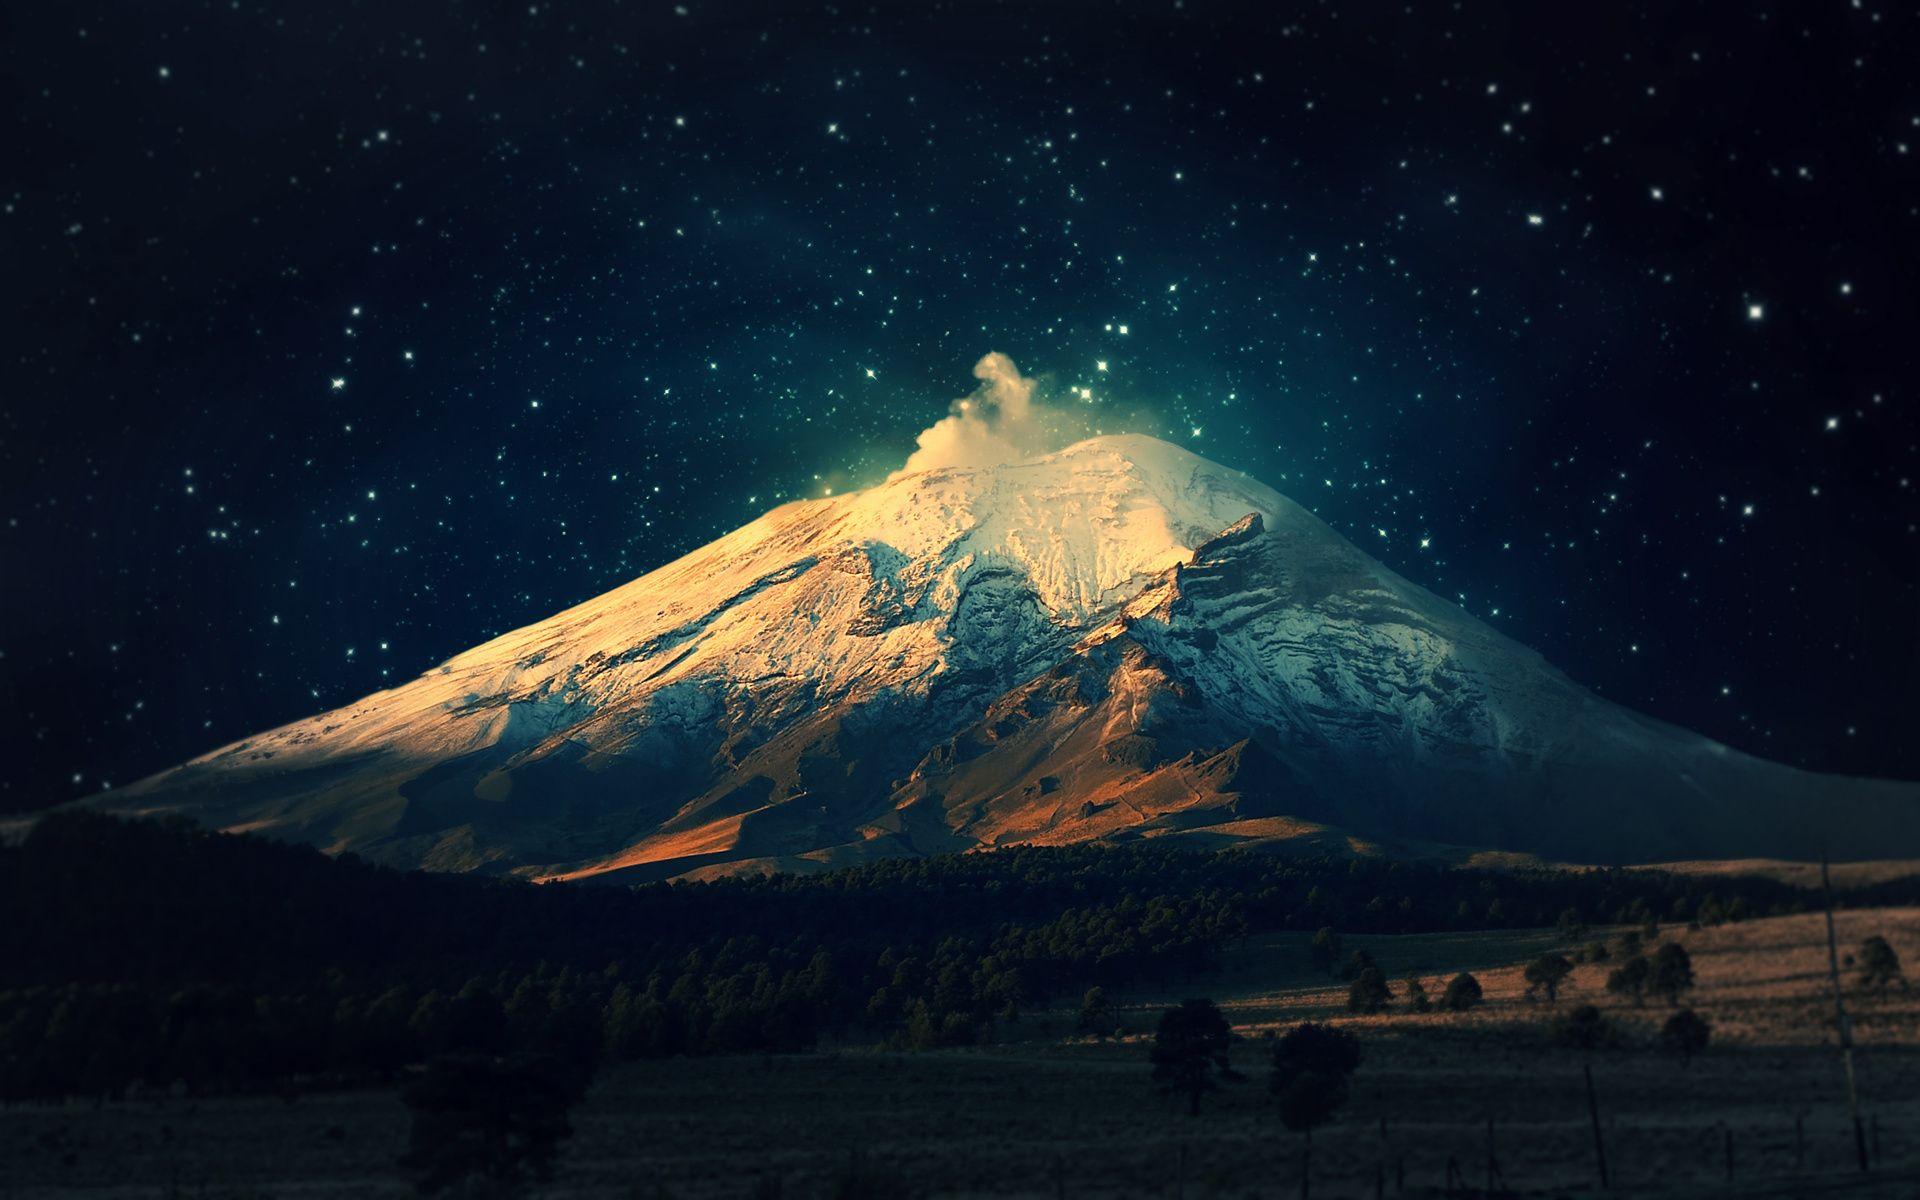 Free Night Mountain Image